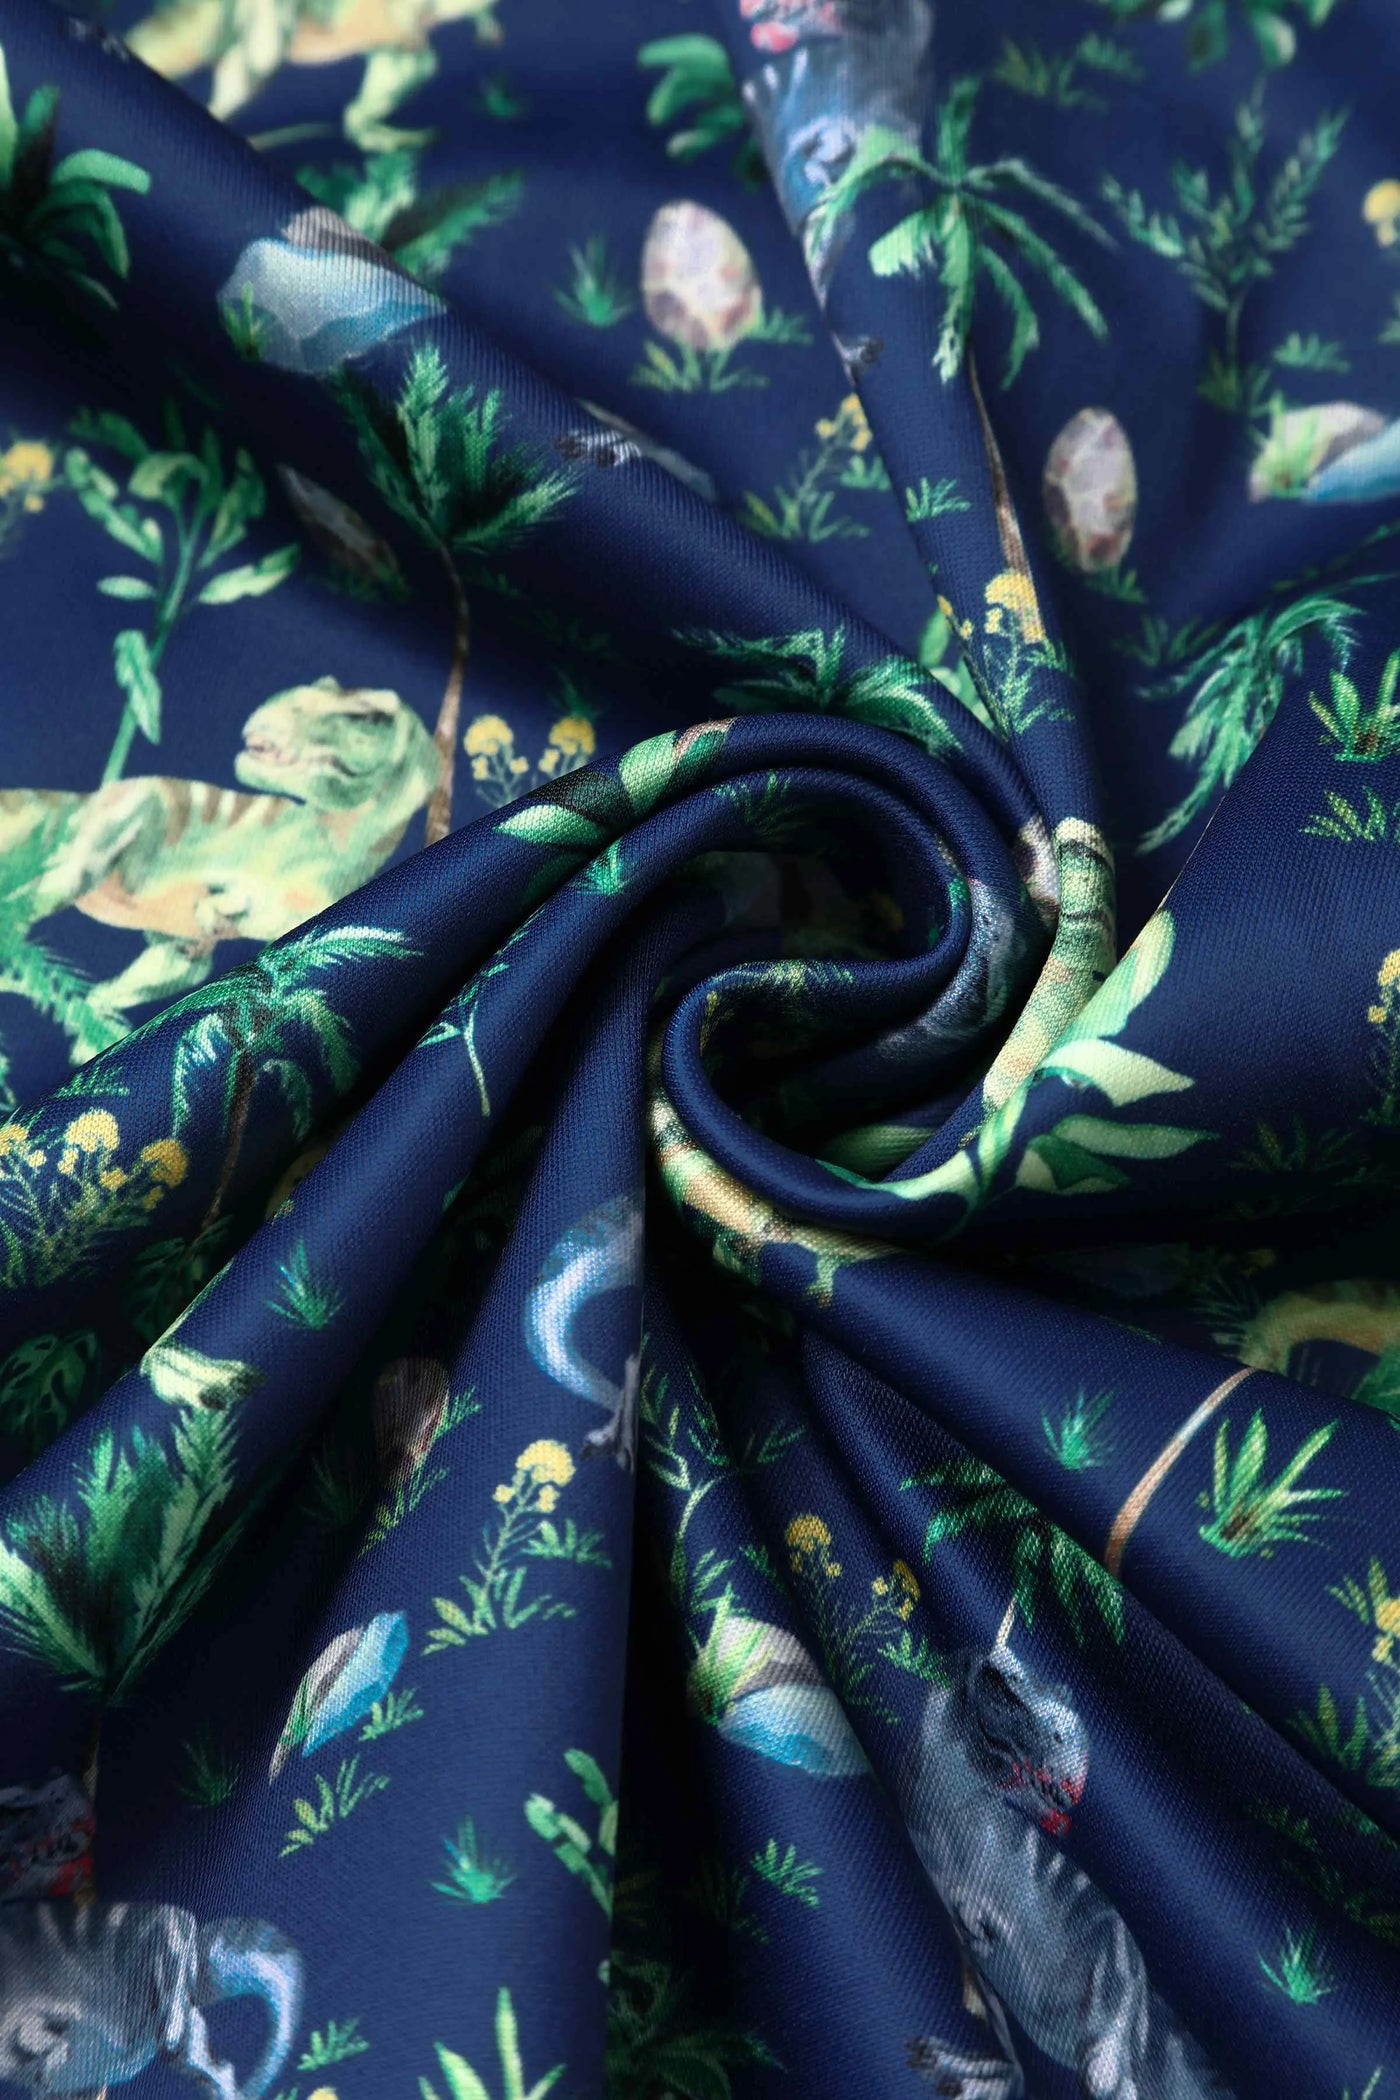 T-rex dinosaur print dress in navy blue fabric close up